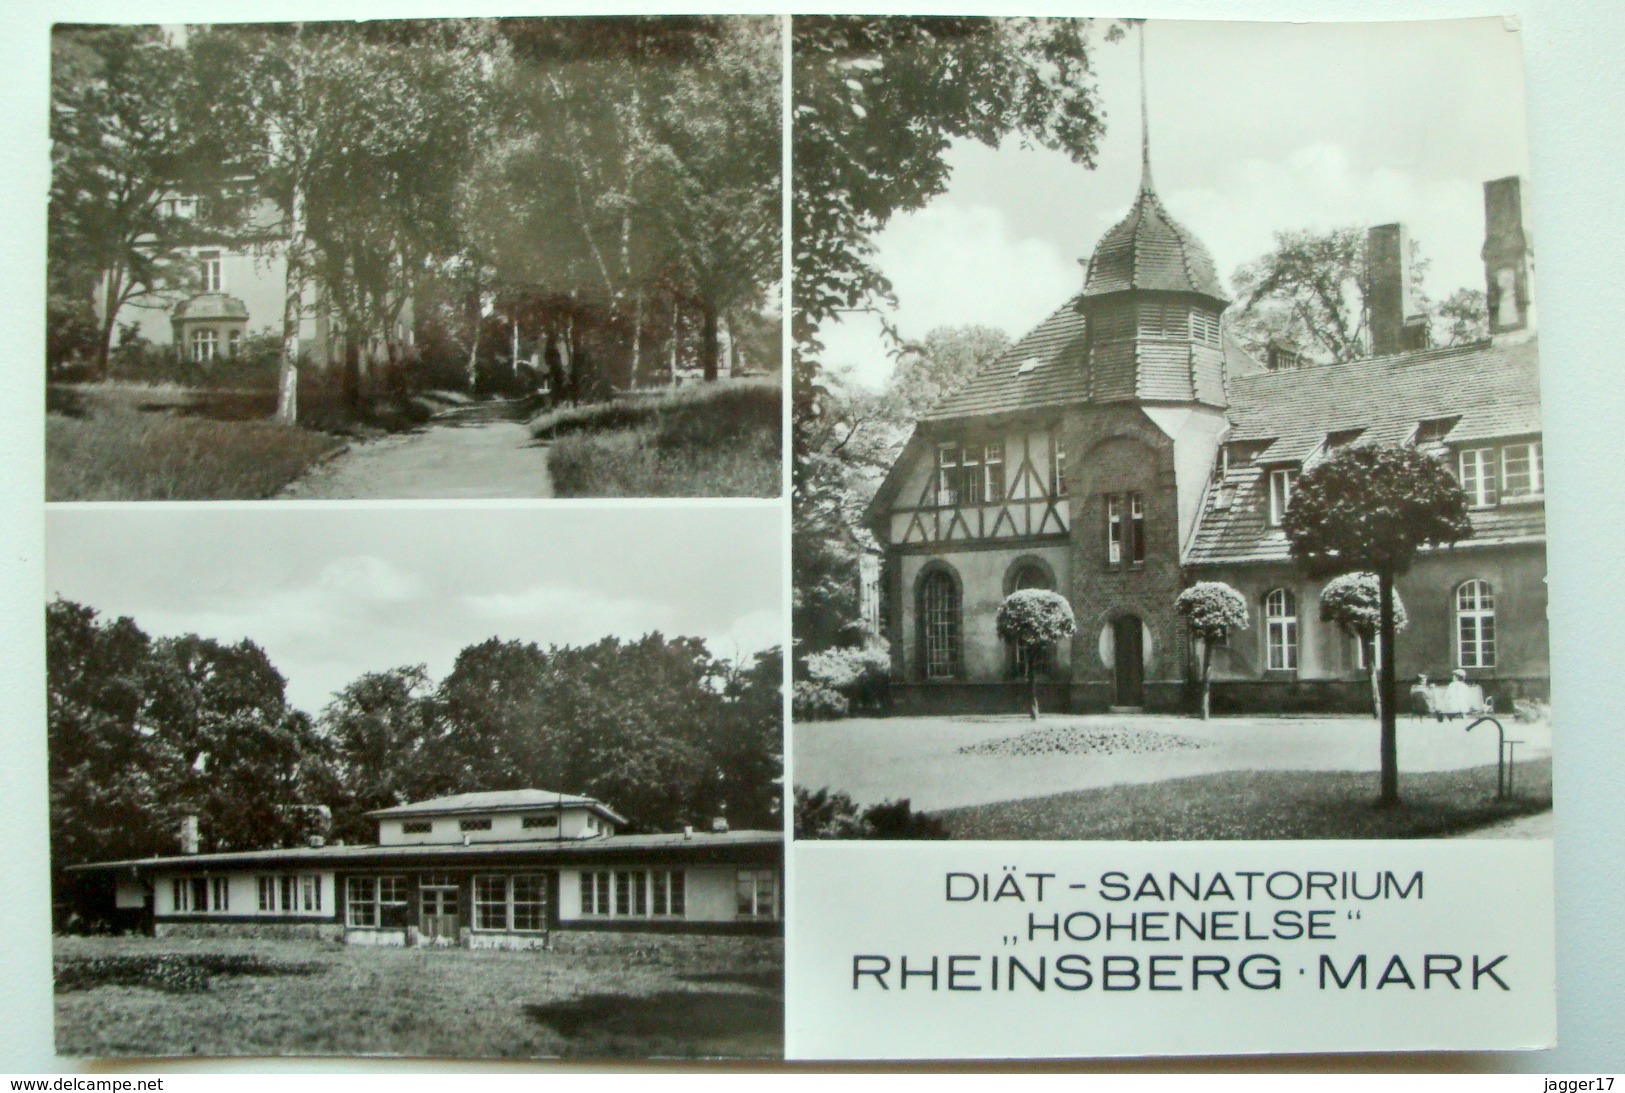 Diät-Sanatorium - Rheinsberg